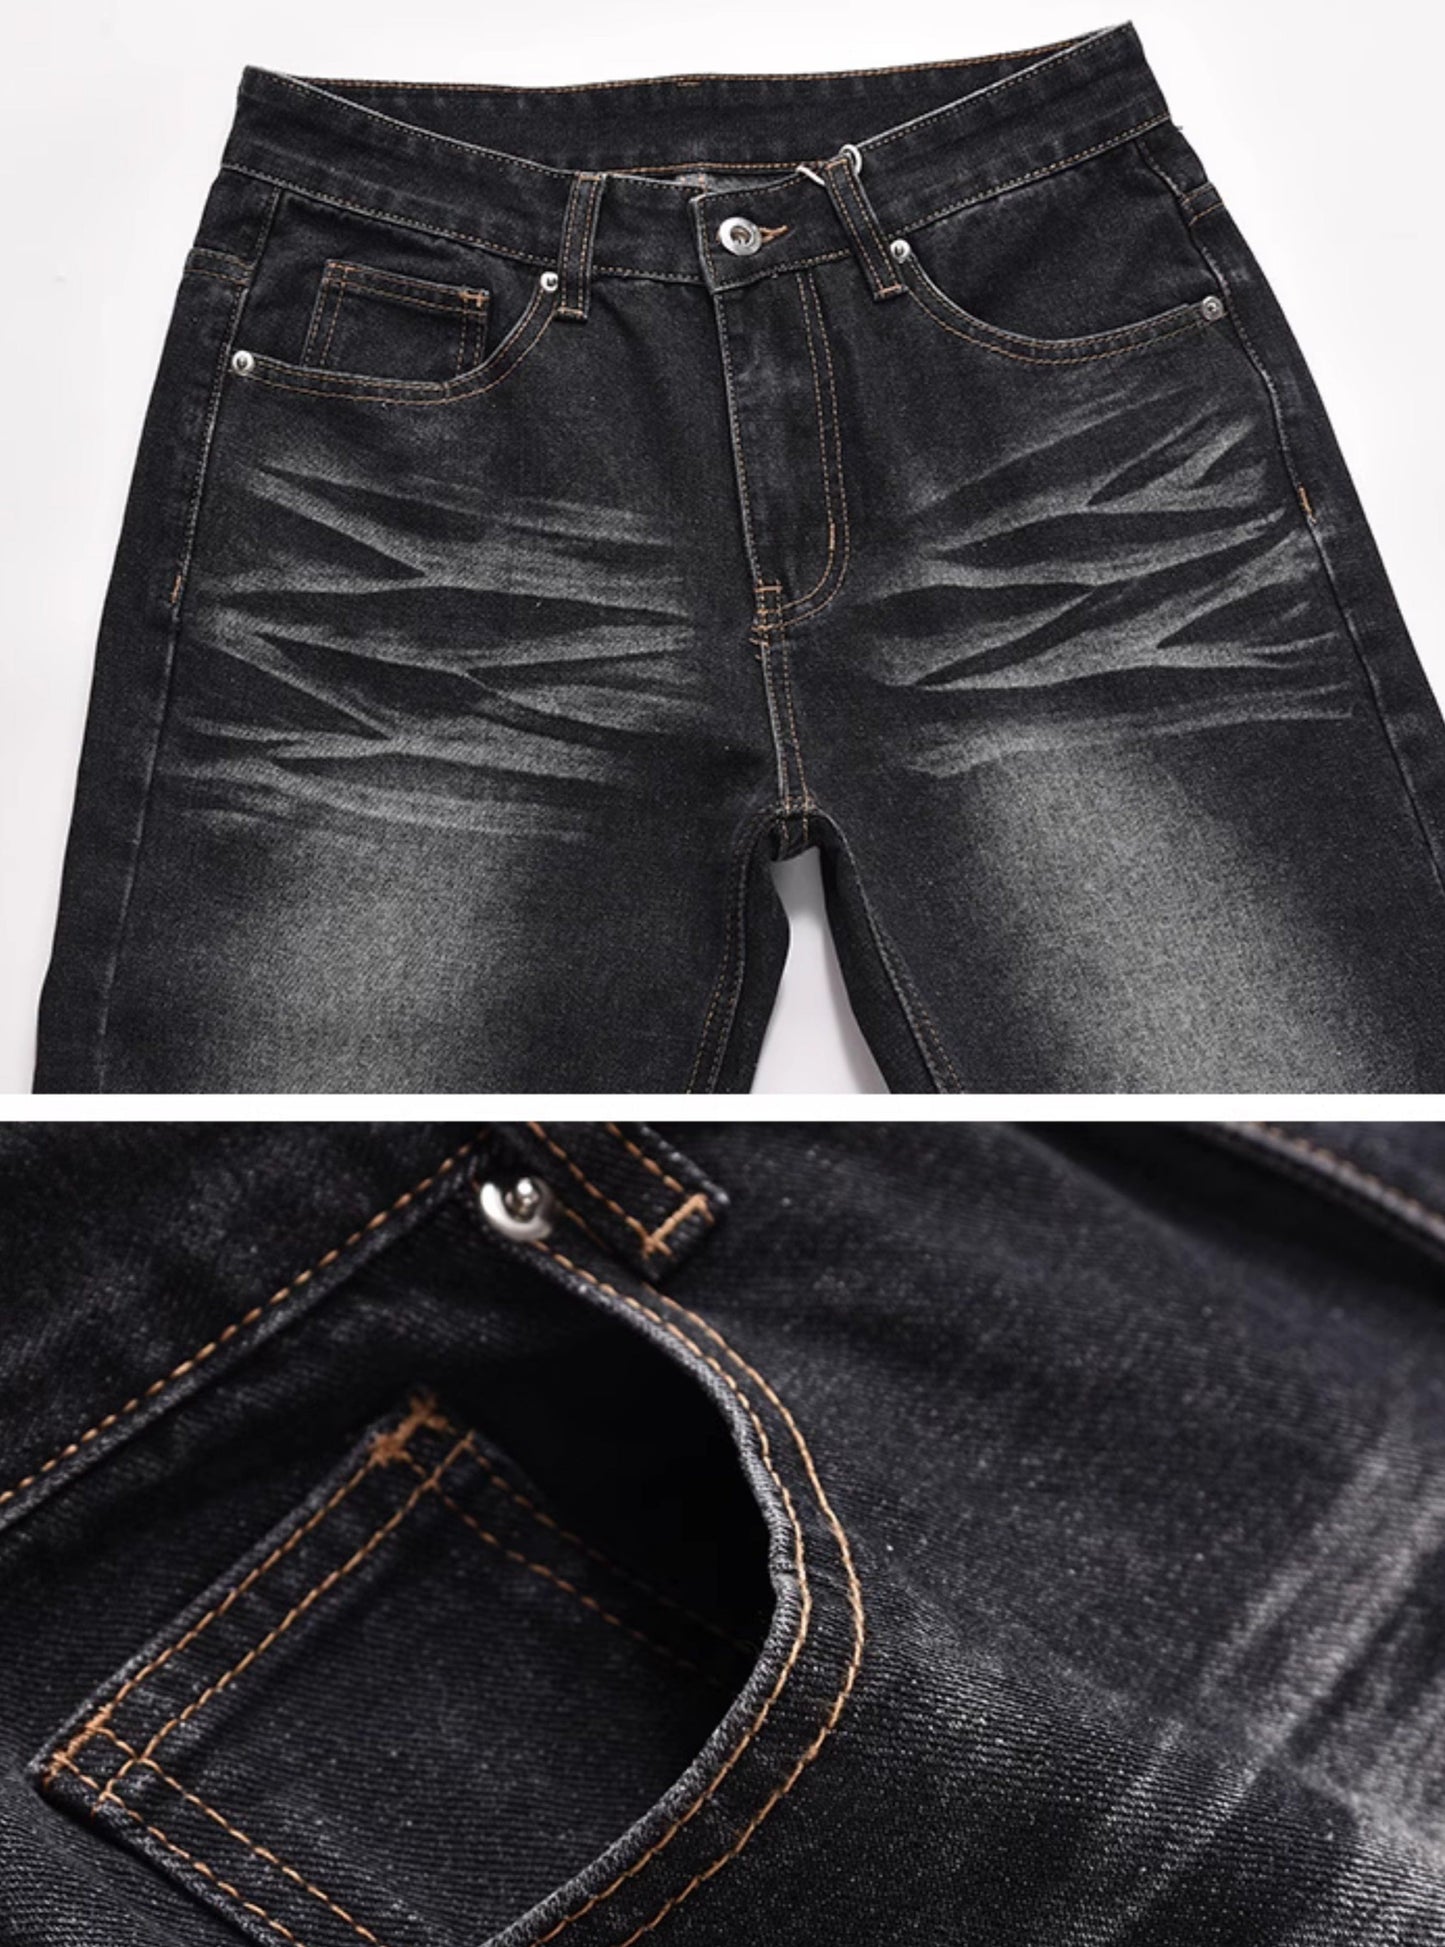 American vibe style high street wash black jeans pants